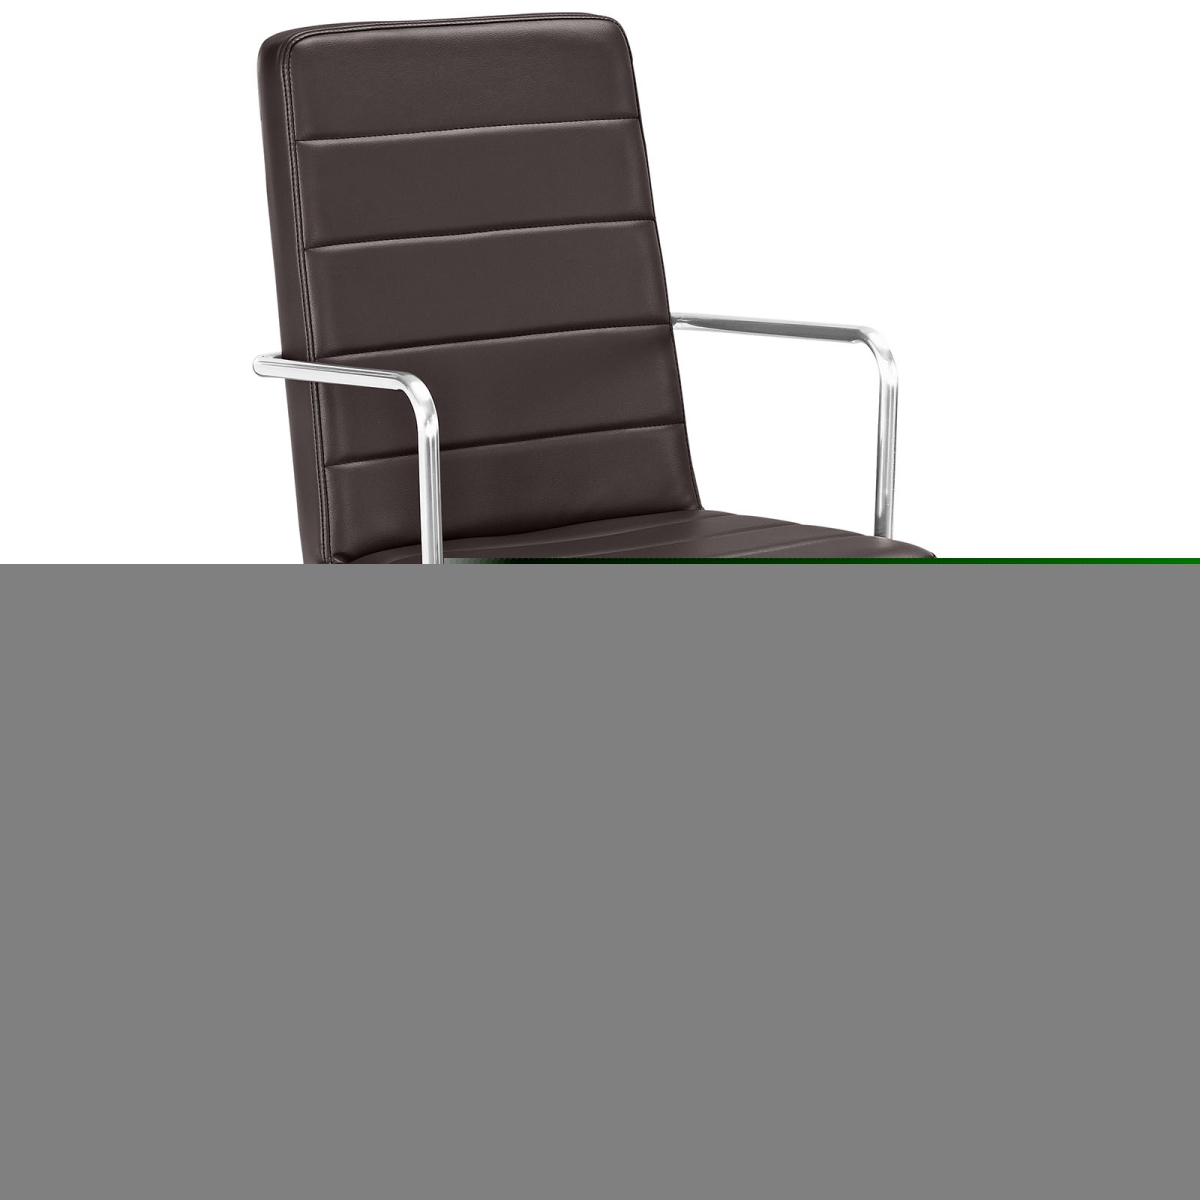 Modway Eei-2124-brn Cavalier Highback Office Chair, Brown